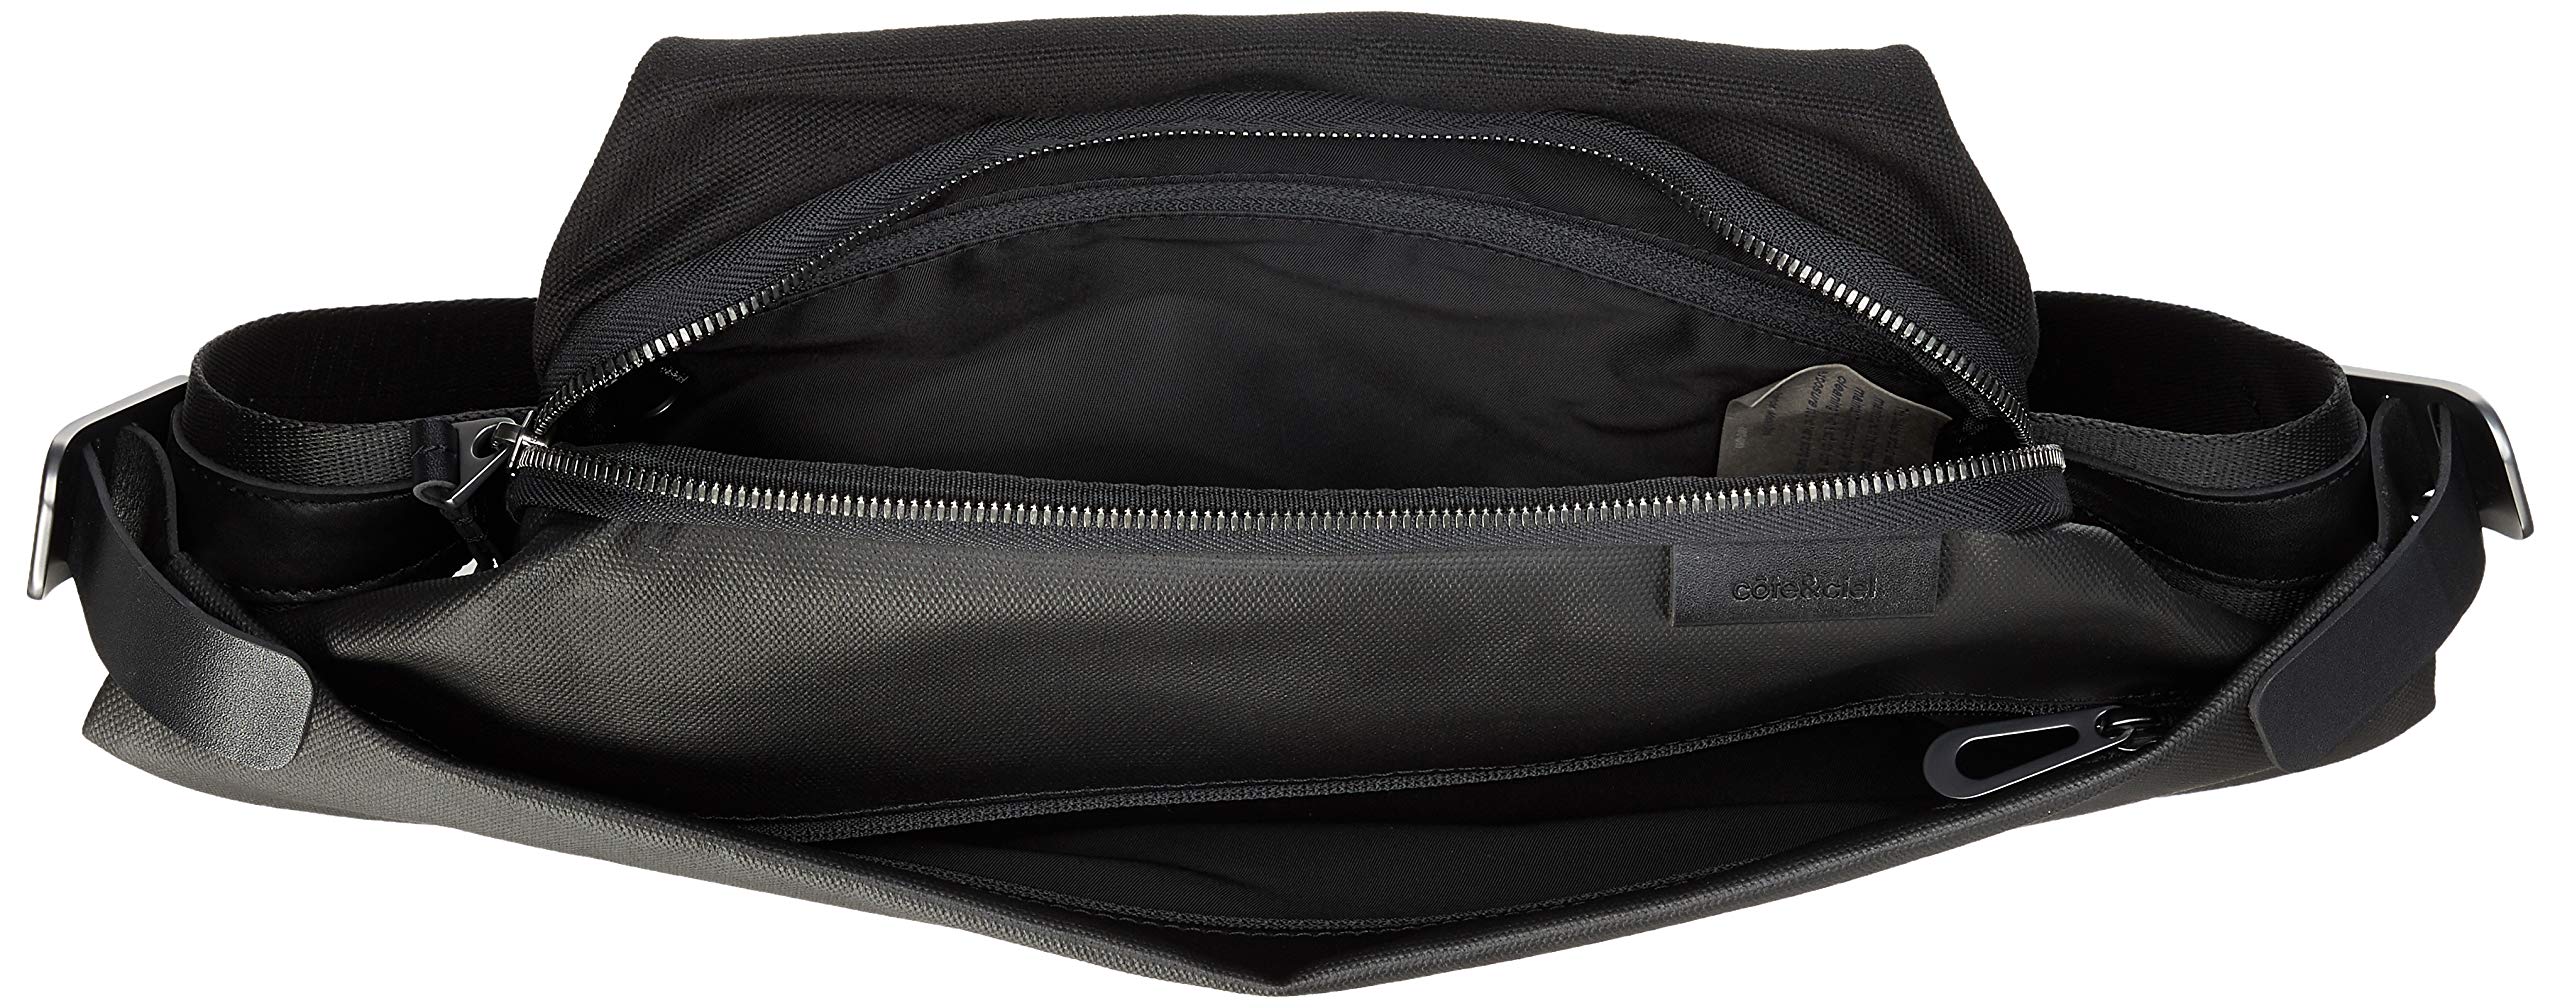 Cote & Ciel Men's Isarau Coated Canvas Belt Bag, Black, One Size